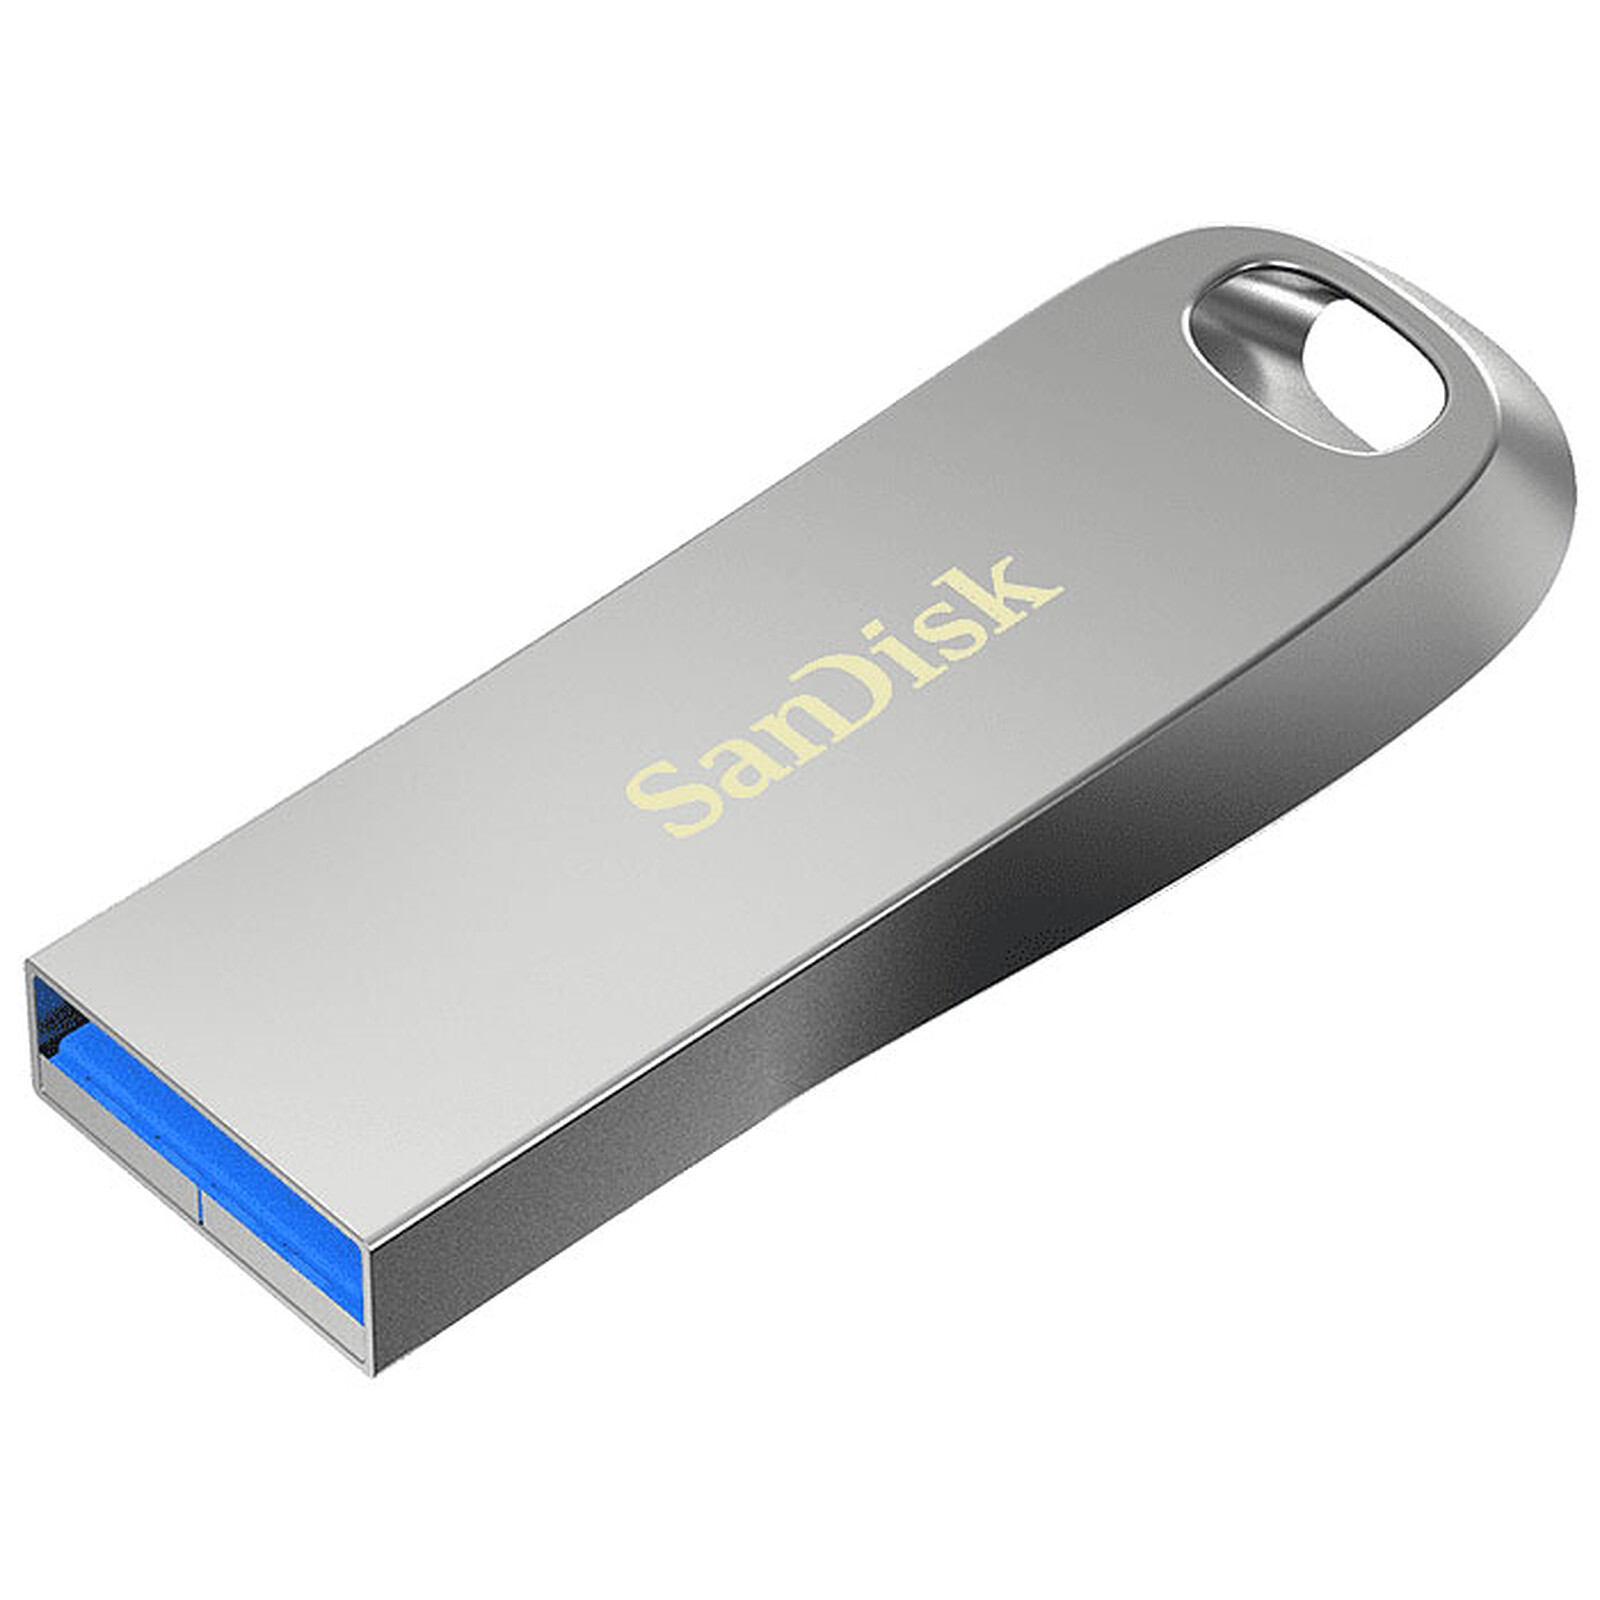 SanDisk Ultra Luxe 16 GB - USB flash drive - LDLC 3-year warranty